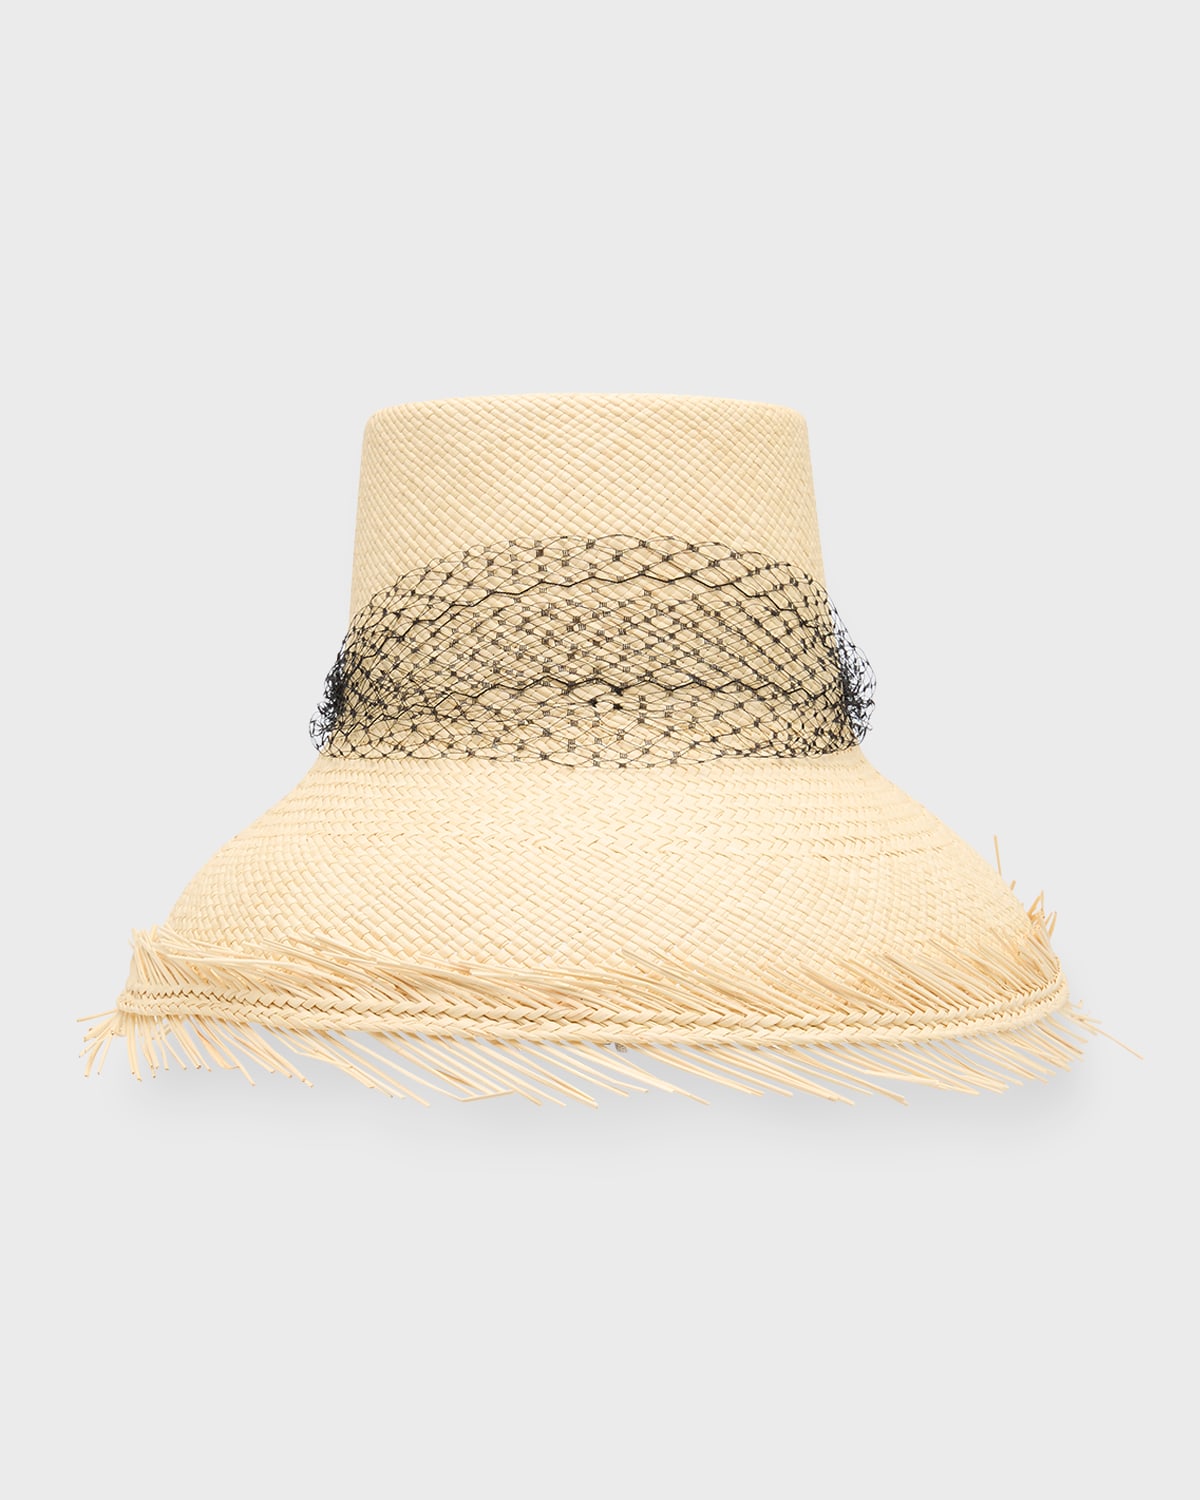 Sensi Studio El Campesino Straw Bucket Hat With Tulle In Natural Black